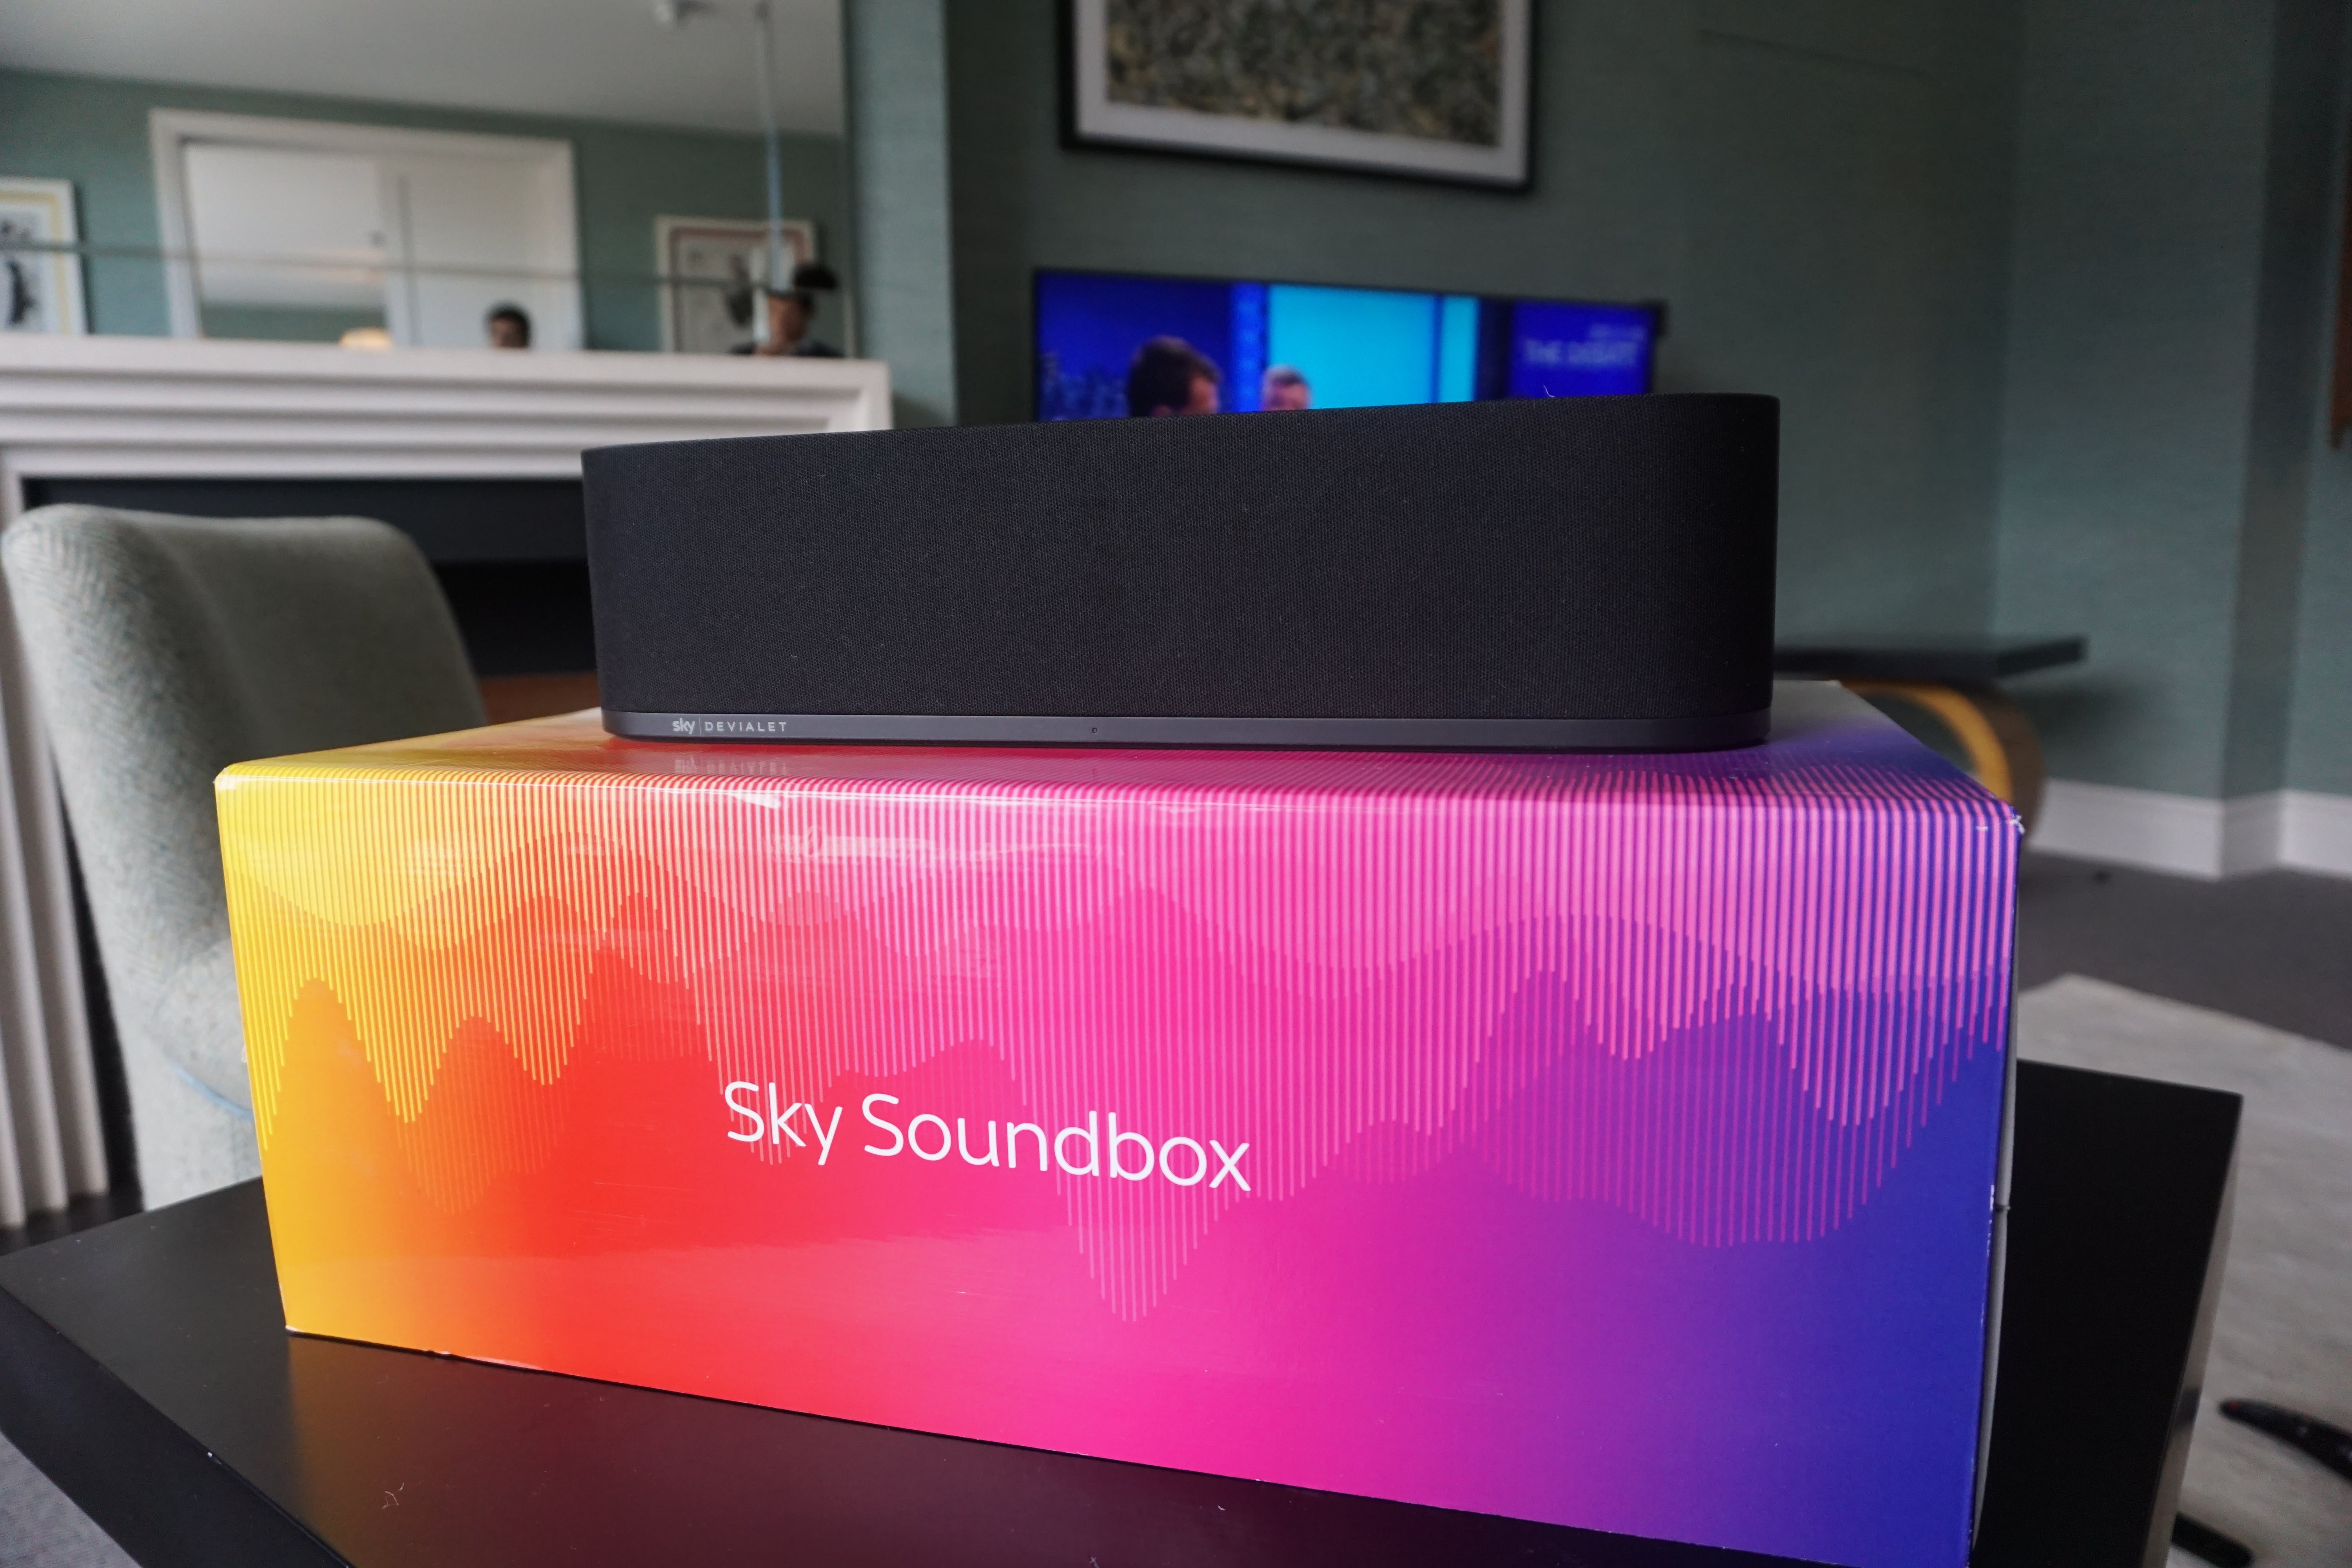 Sky Soundbox speaker on top of its colorful packaging.